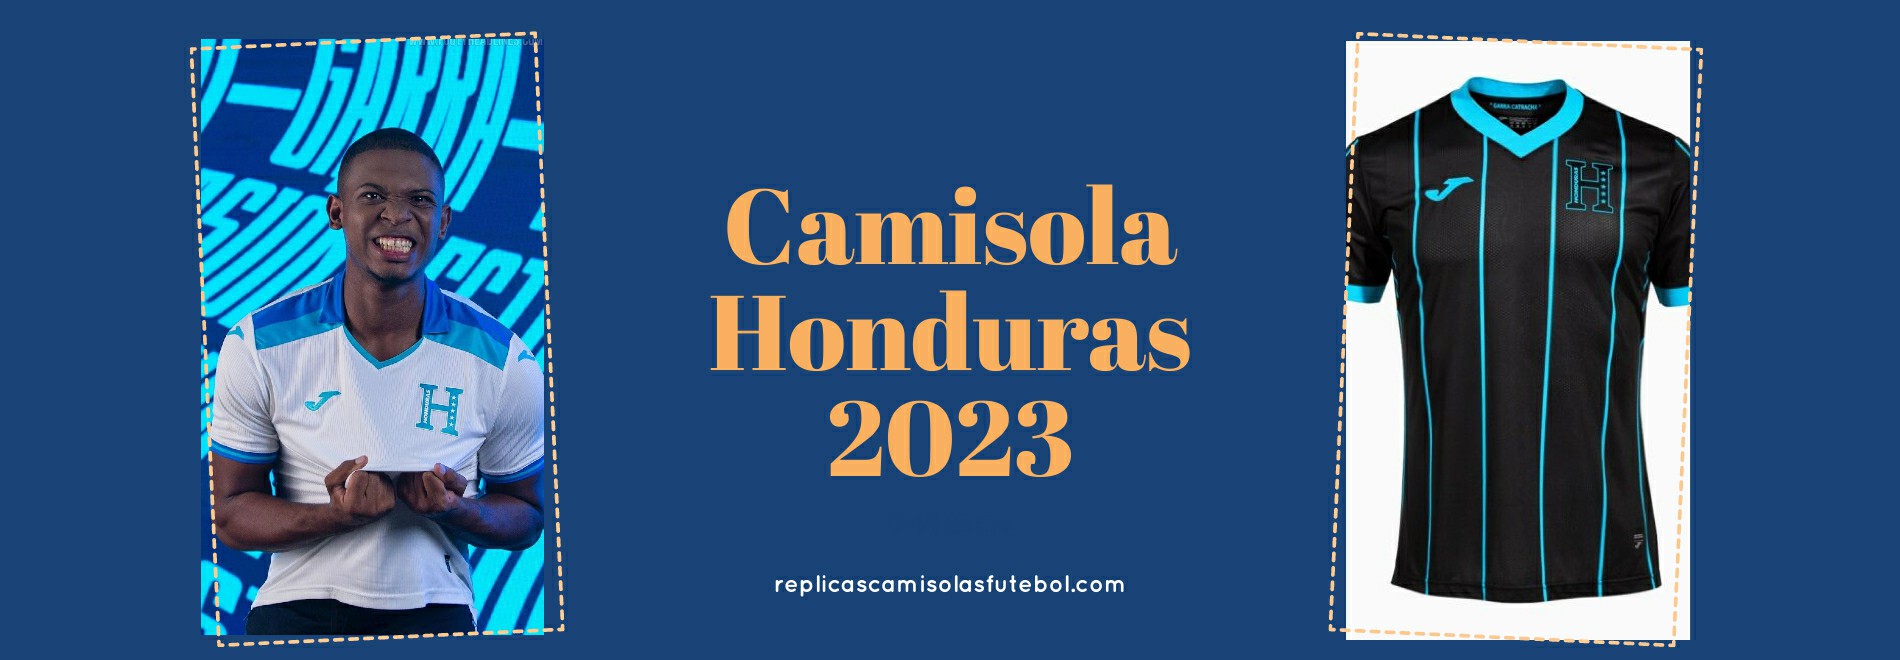 Camisola Honduras 2023-2024